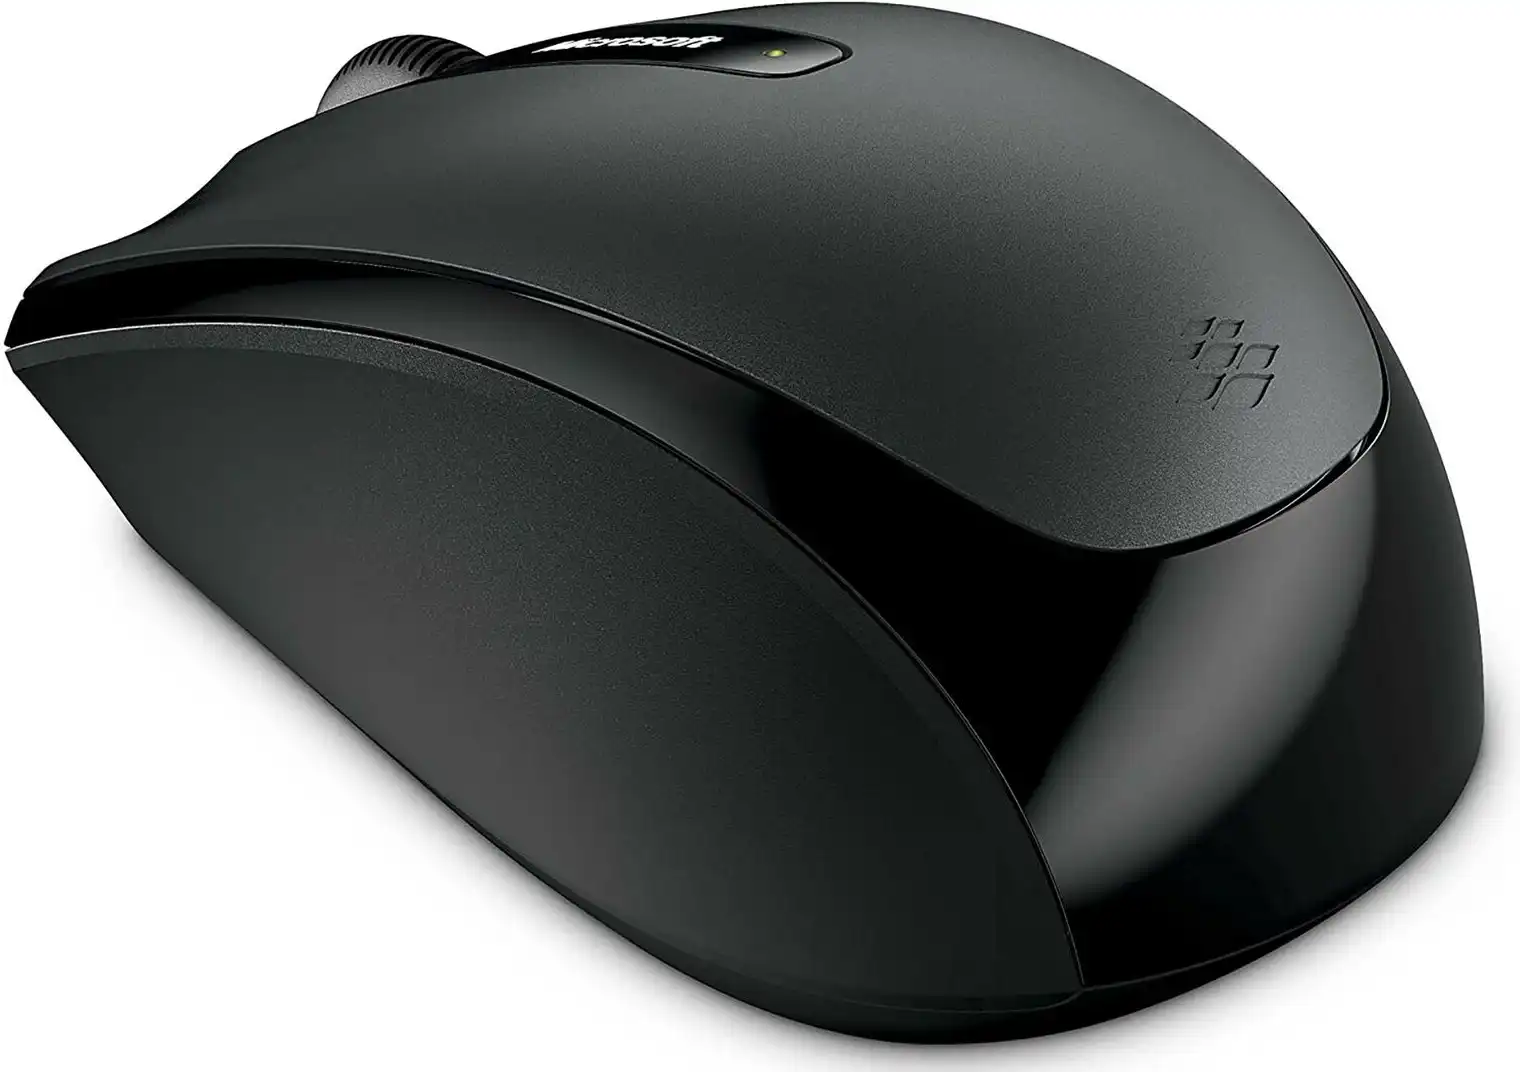 Microsoft Wireless Mouse 3500, 1000 DPI, Black, MO659